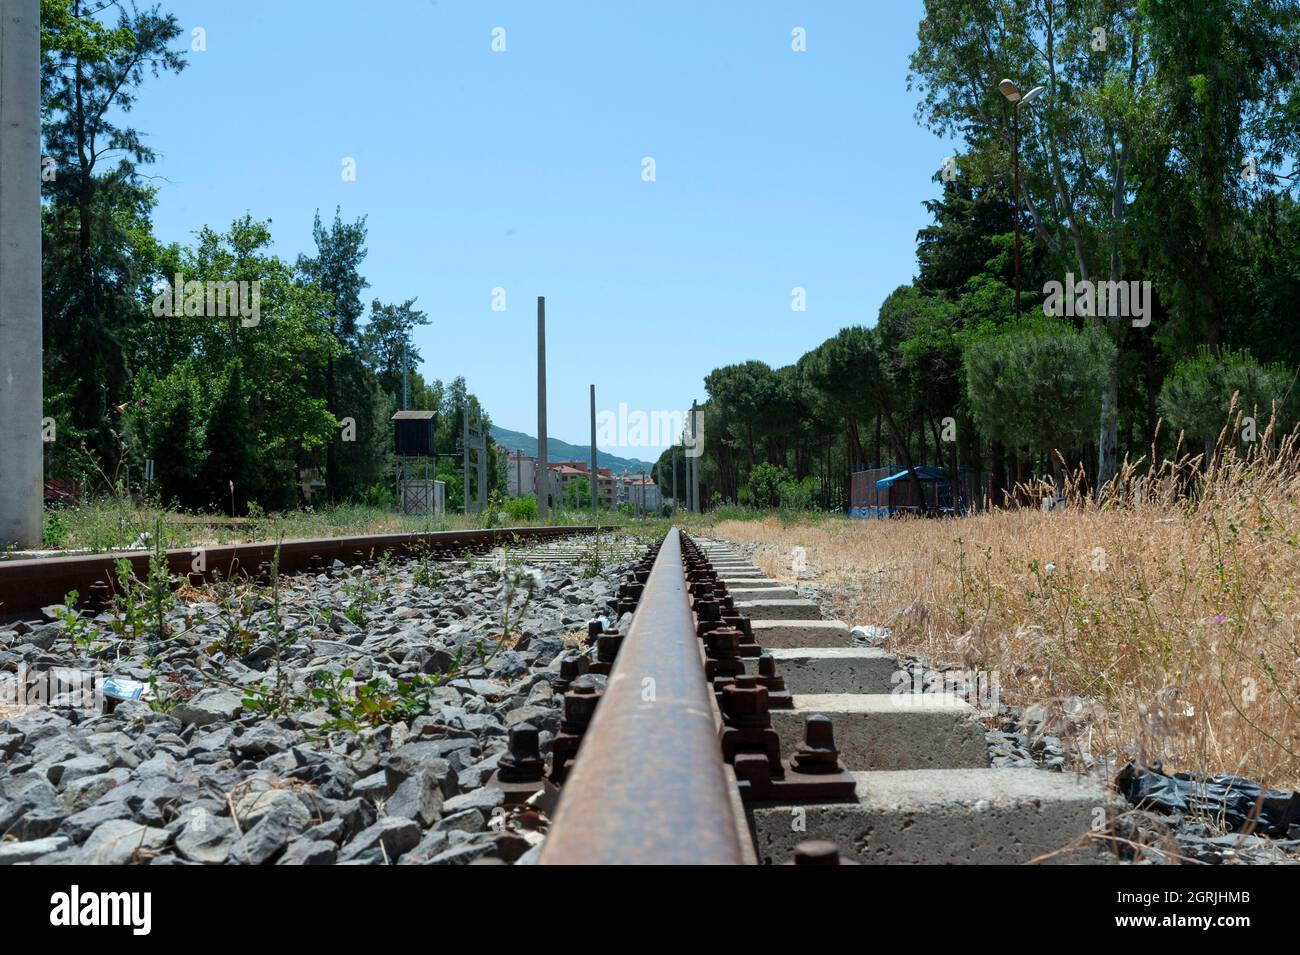 Railway, railroad, track, rail, train, rusty, old, dirty Stock Photo